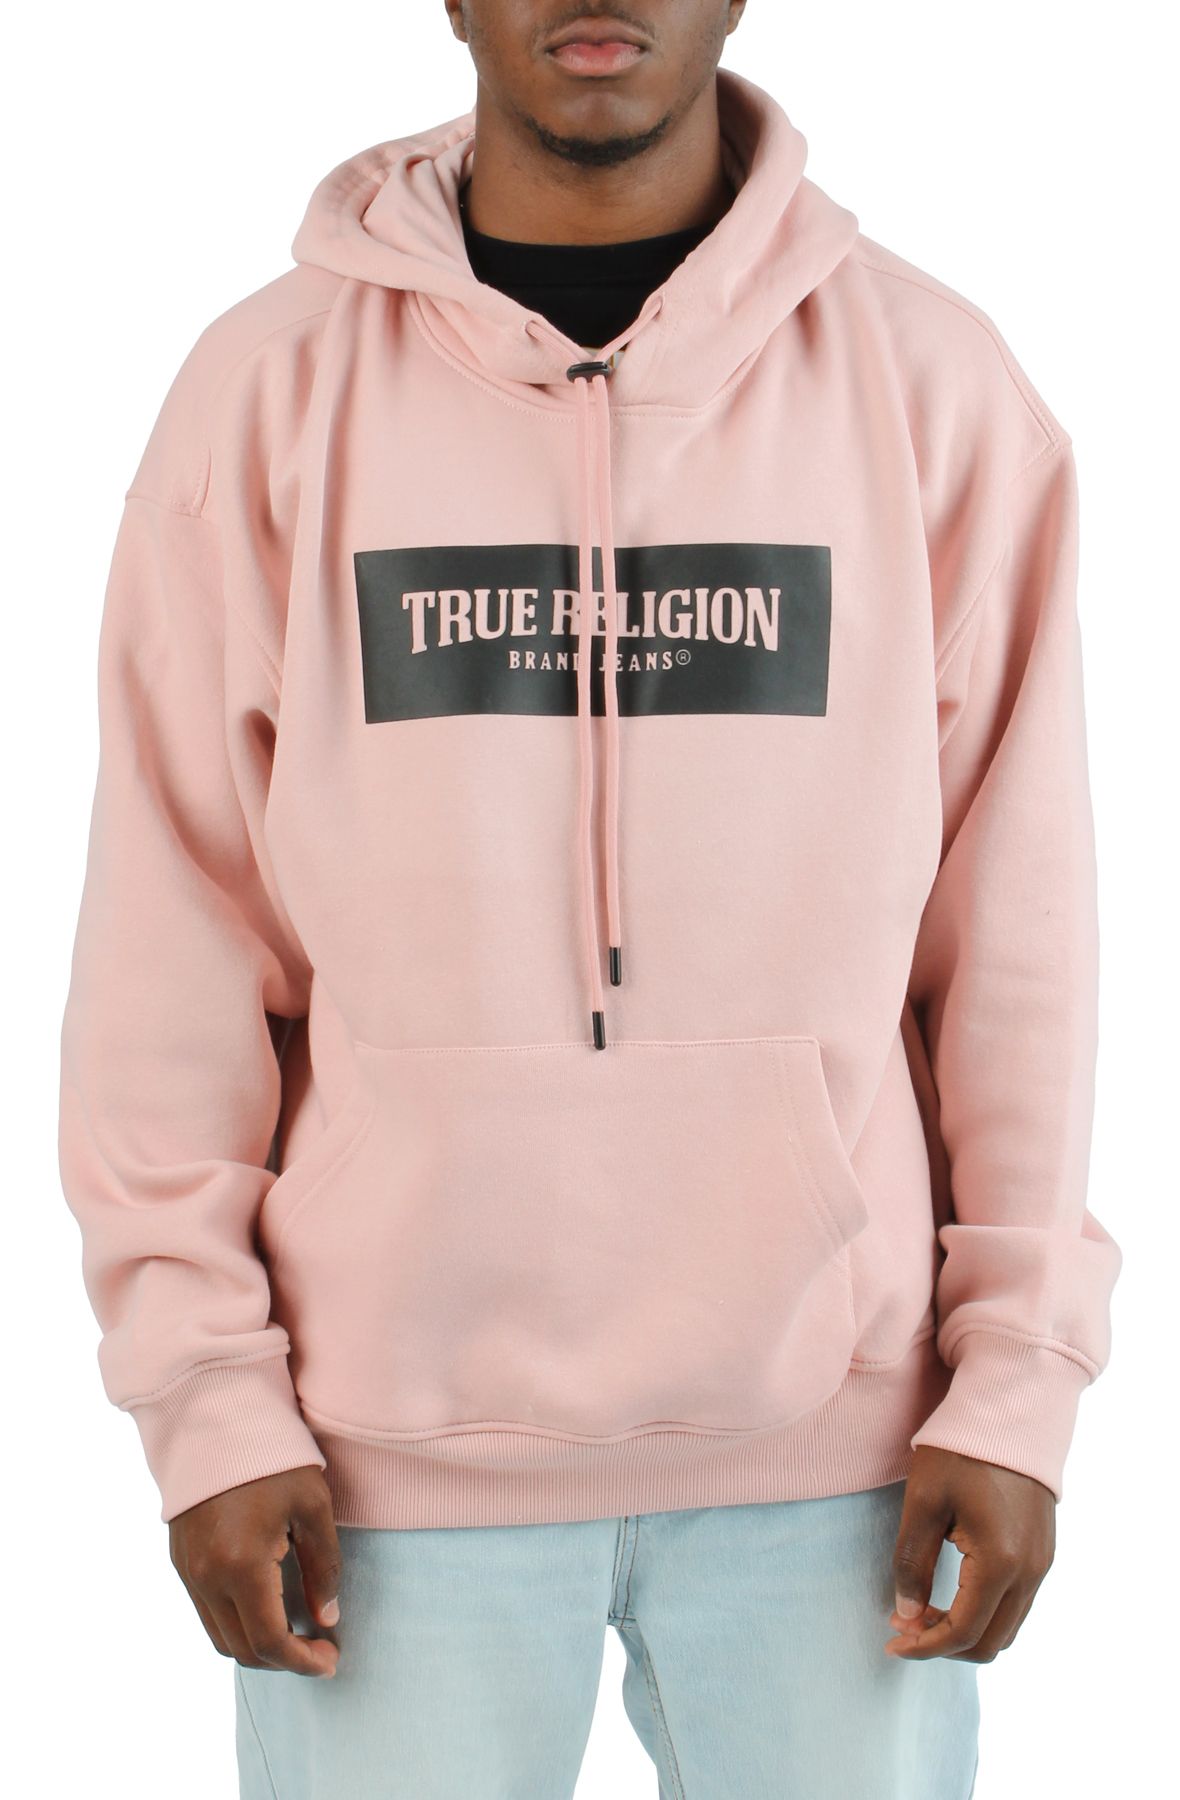 True Religion Pink Hoodie  Pink True Religion Hoodie